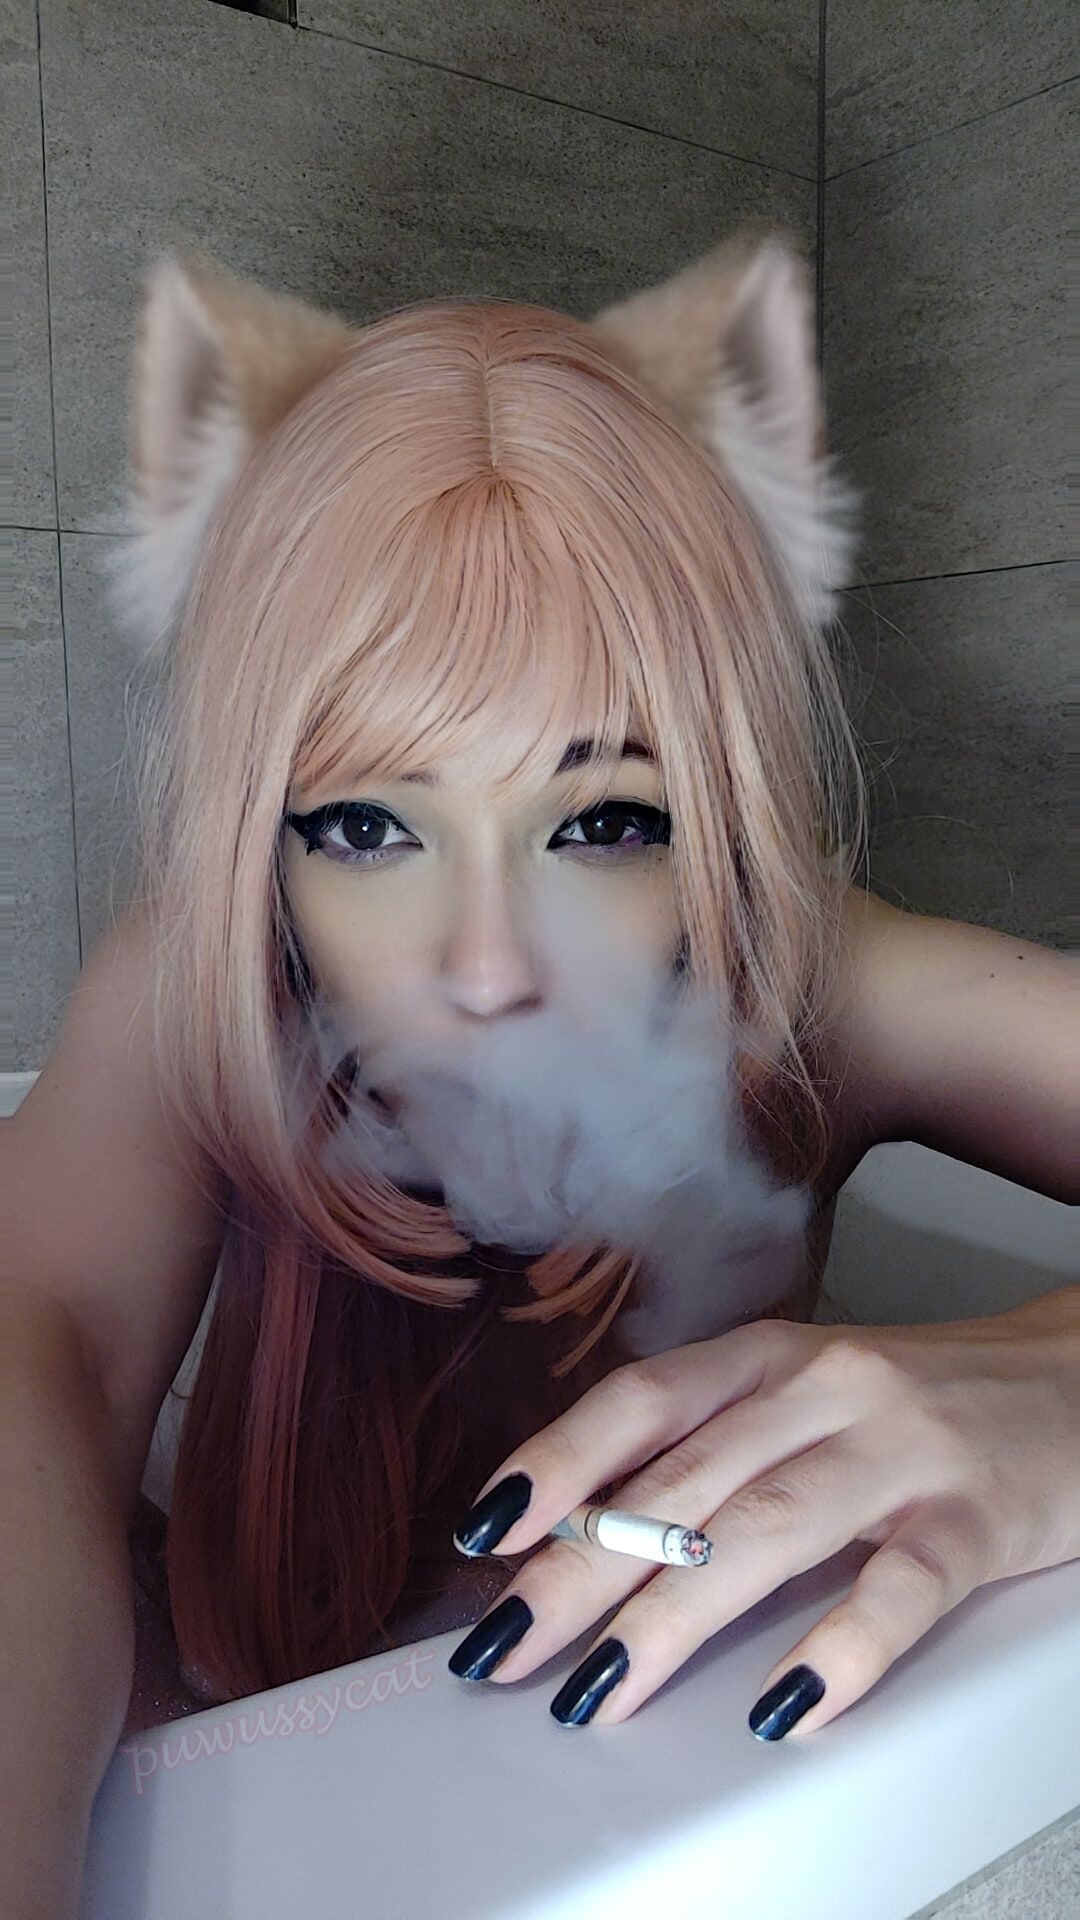 Egirl smoking in bathtub with bubbles #7